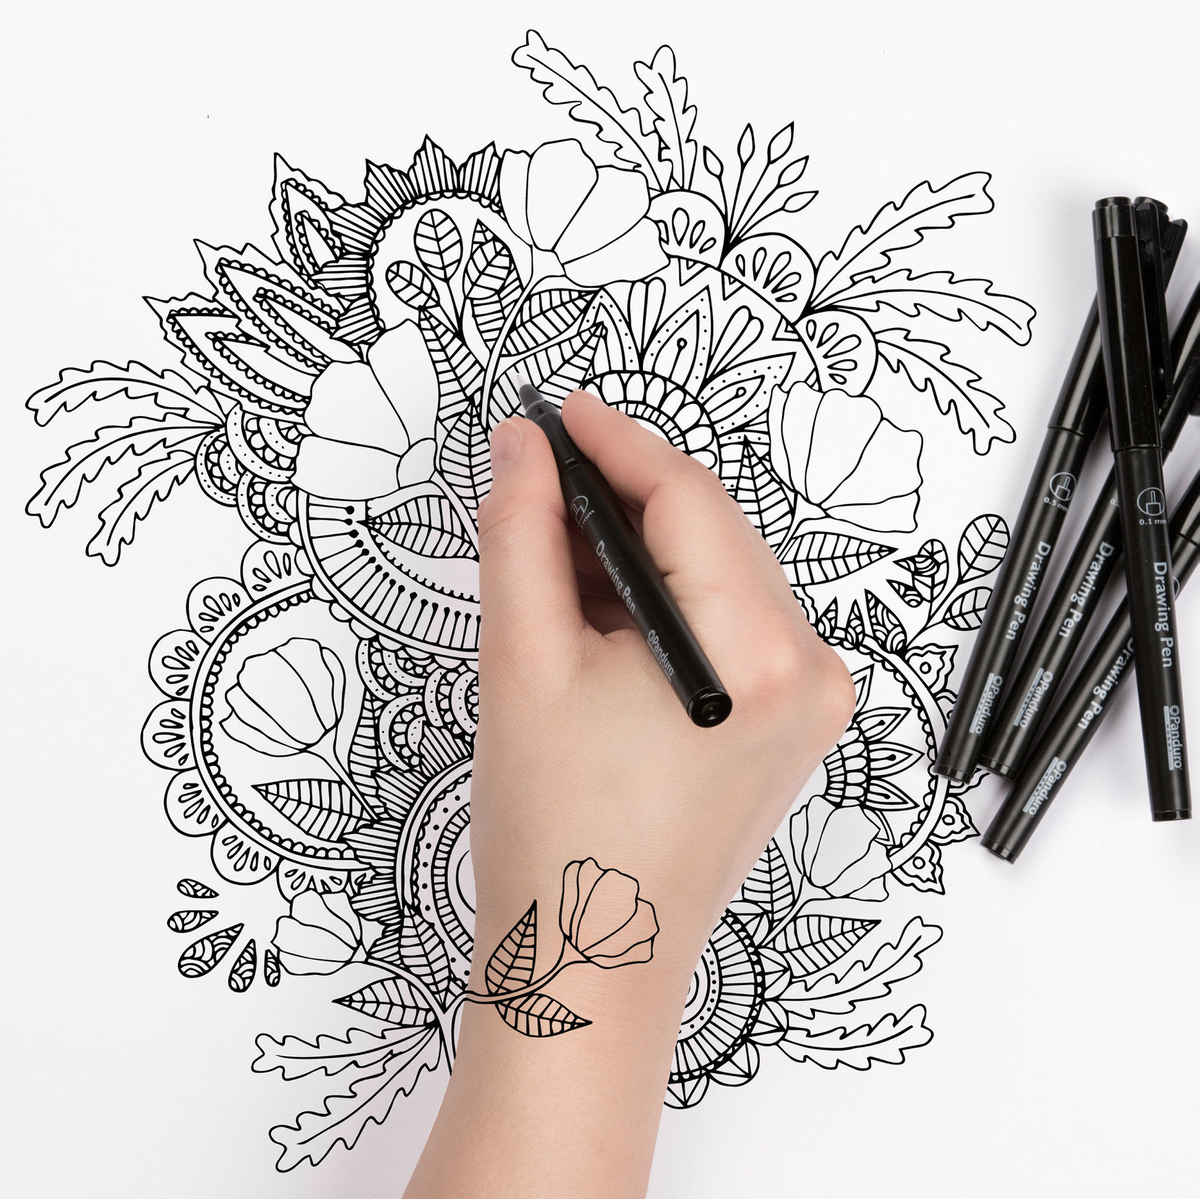 Doodling med Drawing Pen